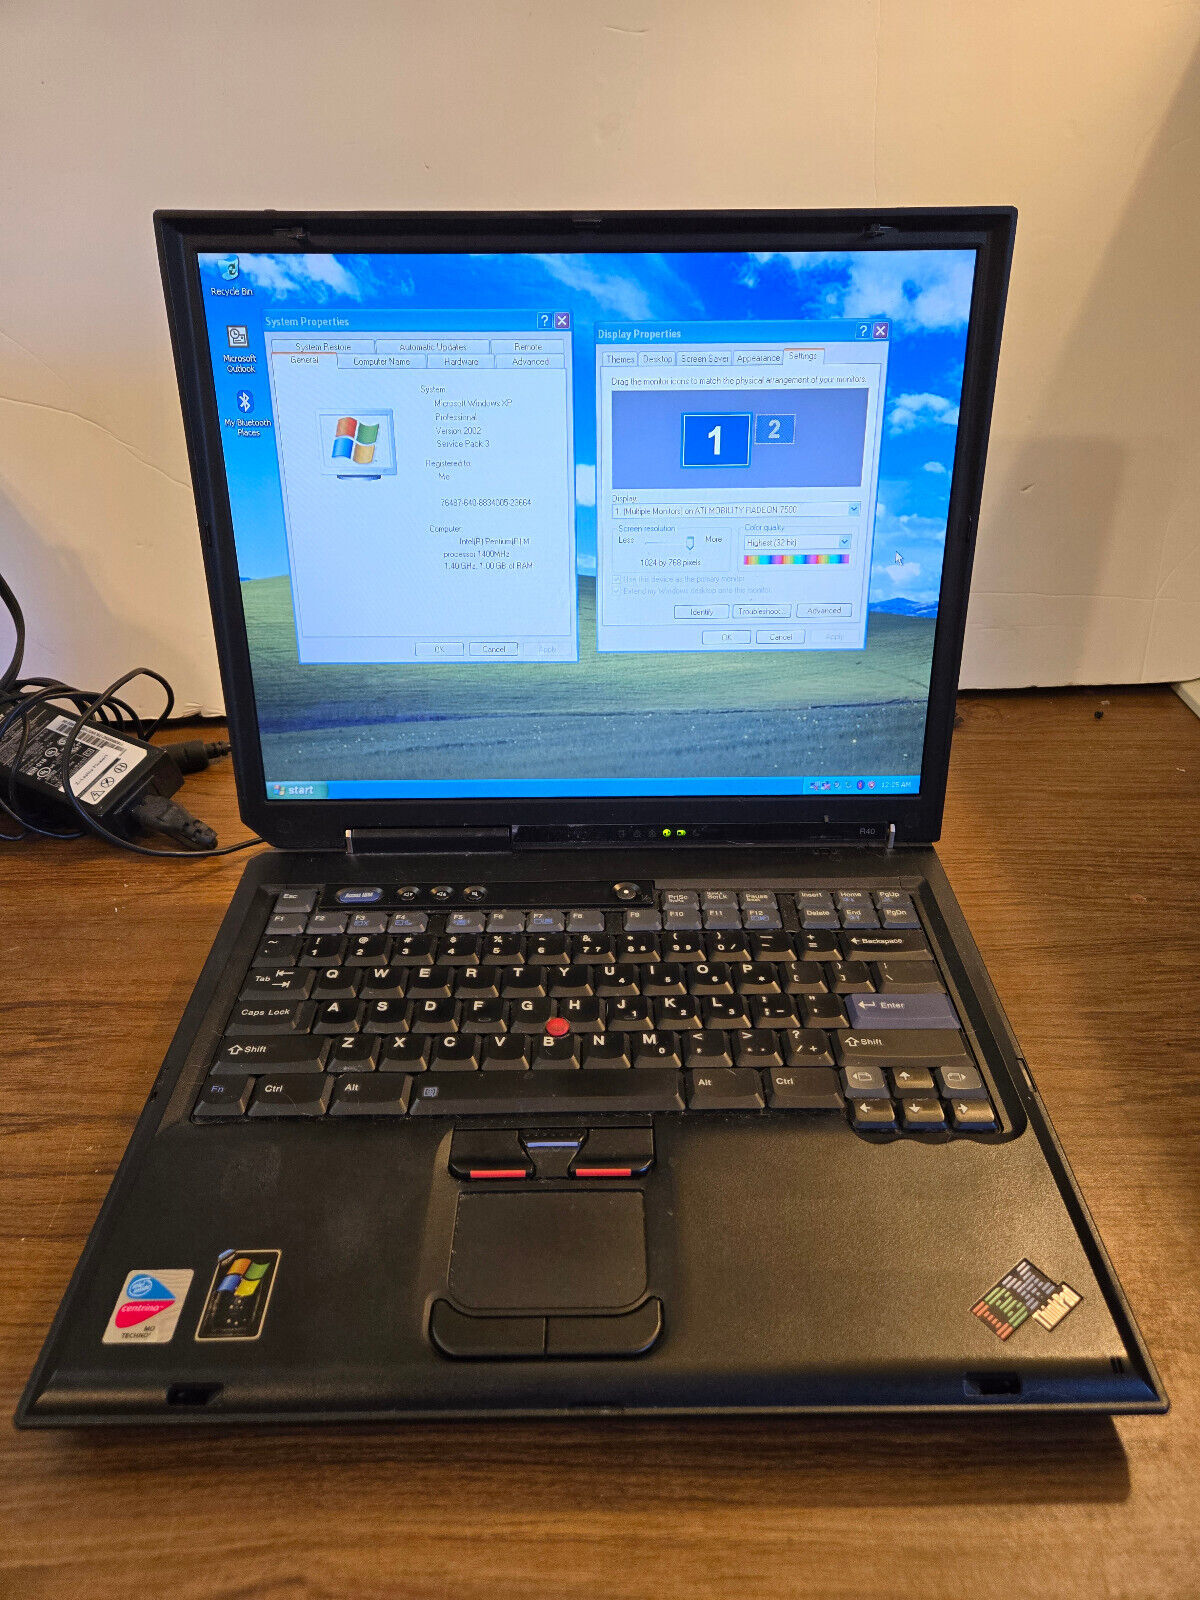 IBM Thinkpad R40 Laptop Pentium M 1.40GHz 1GB DDR 40GB HDD Radeon 7500 XP Office